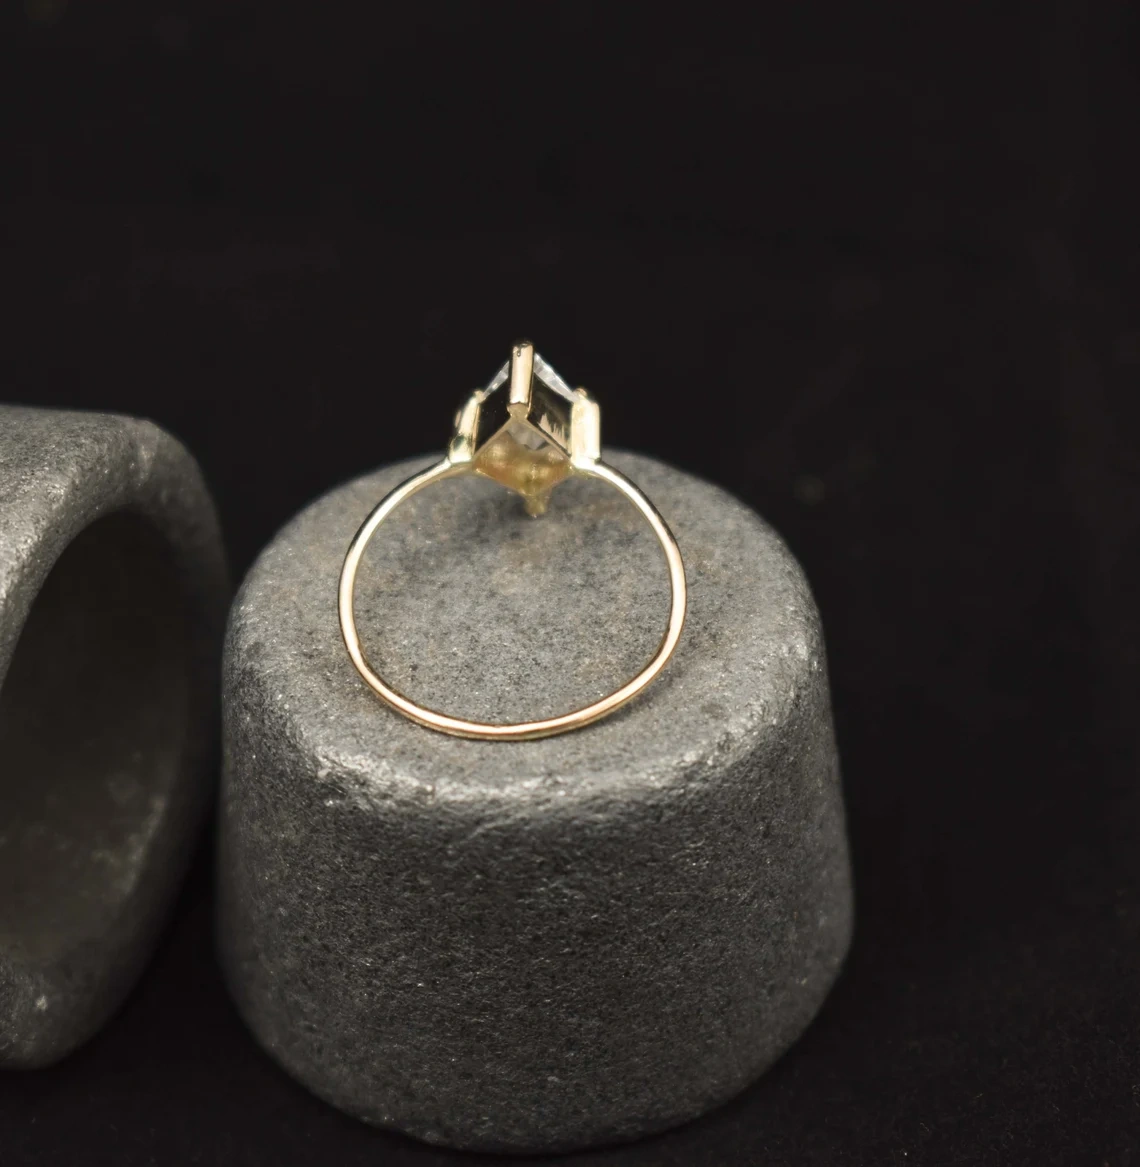 Kite Princess Cut Crystal 10K Solid Gold Ring 10K Gold ring Rock Crystal Minimalist Kite Cut Engagement Ring Inset Stone Handmade Ring-10 3/4 US/Uk size – V-3